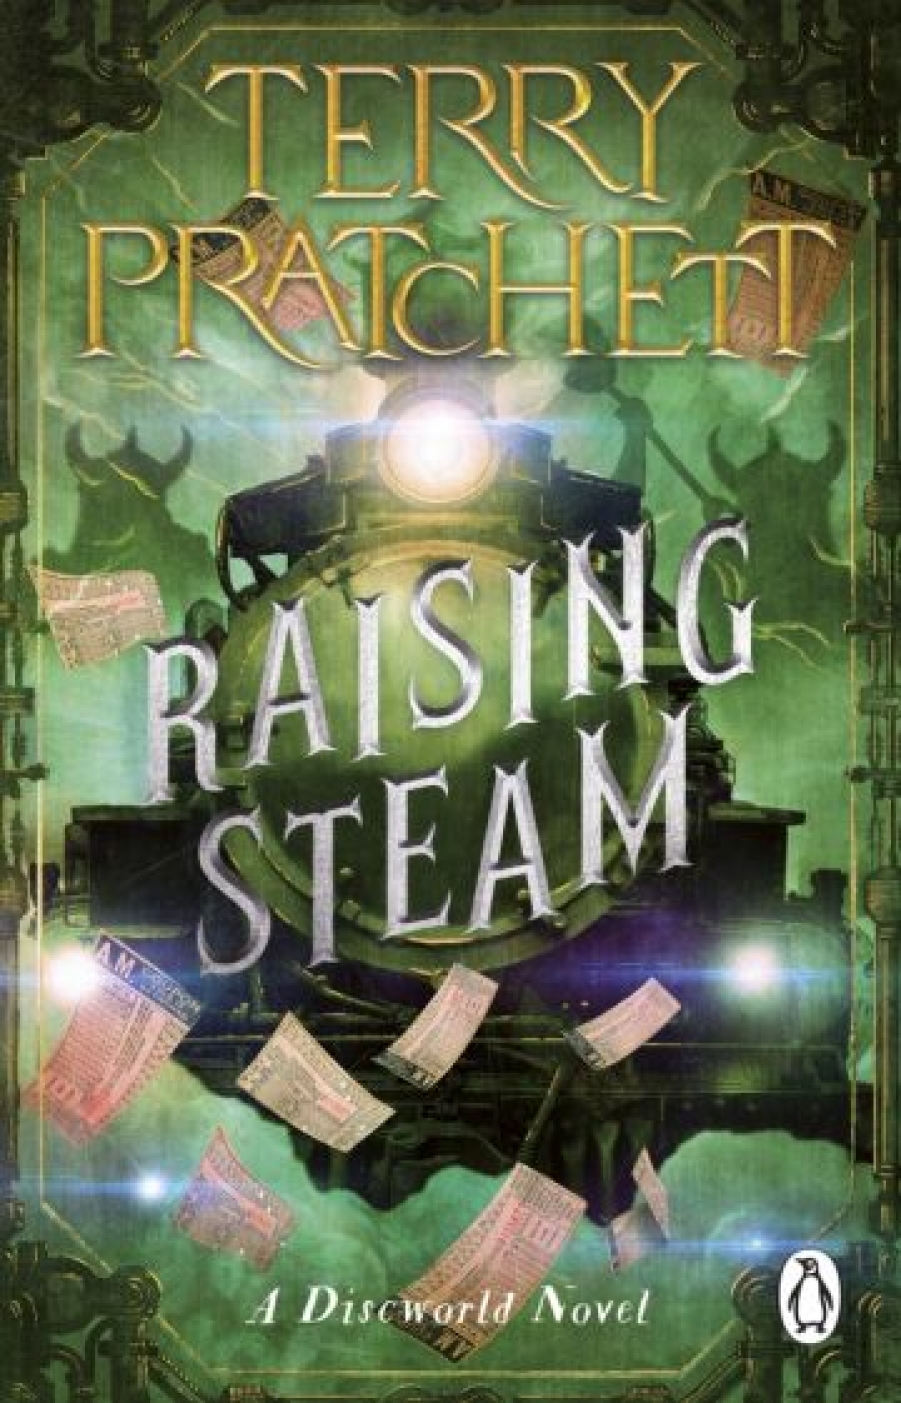 Pratchett Terry Raising Steam 